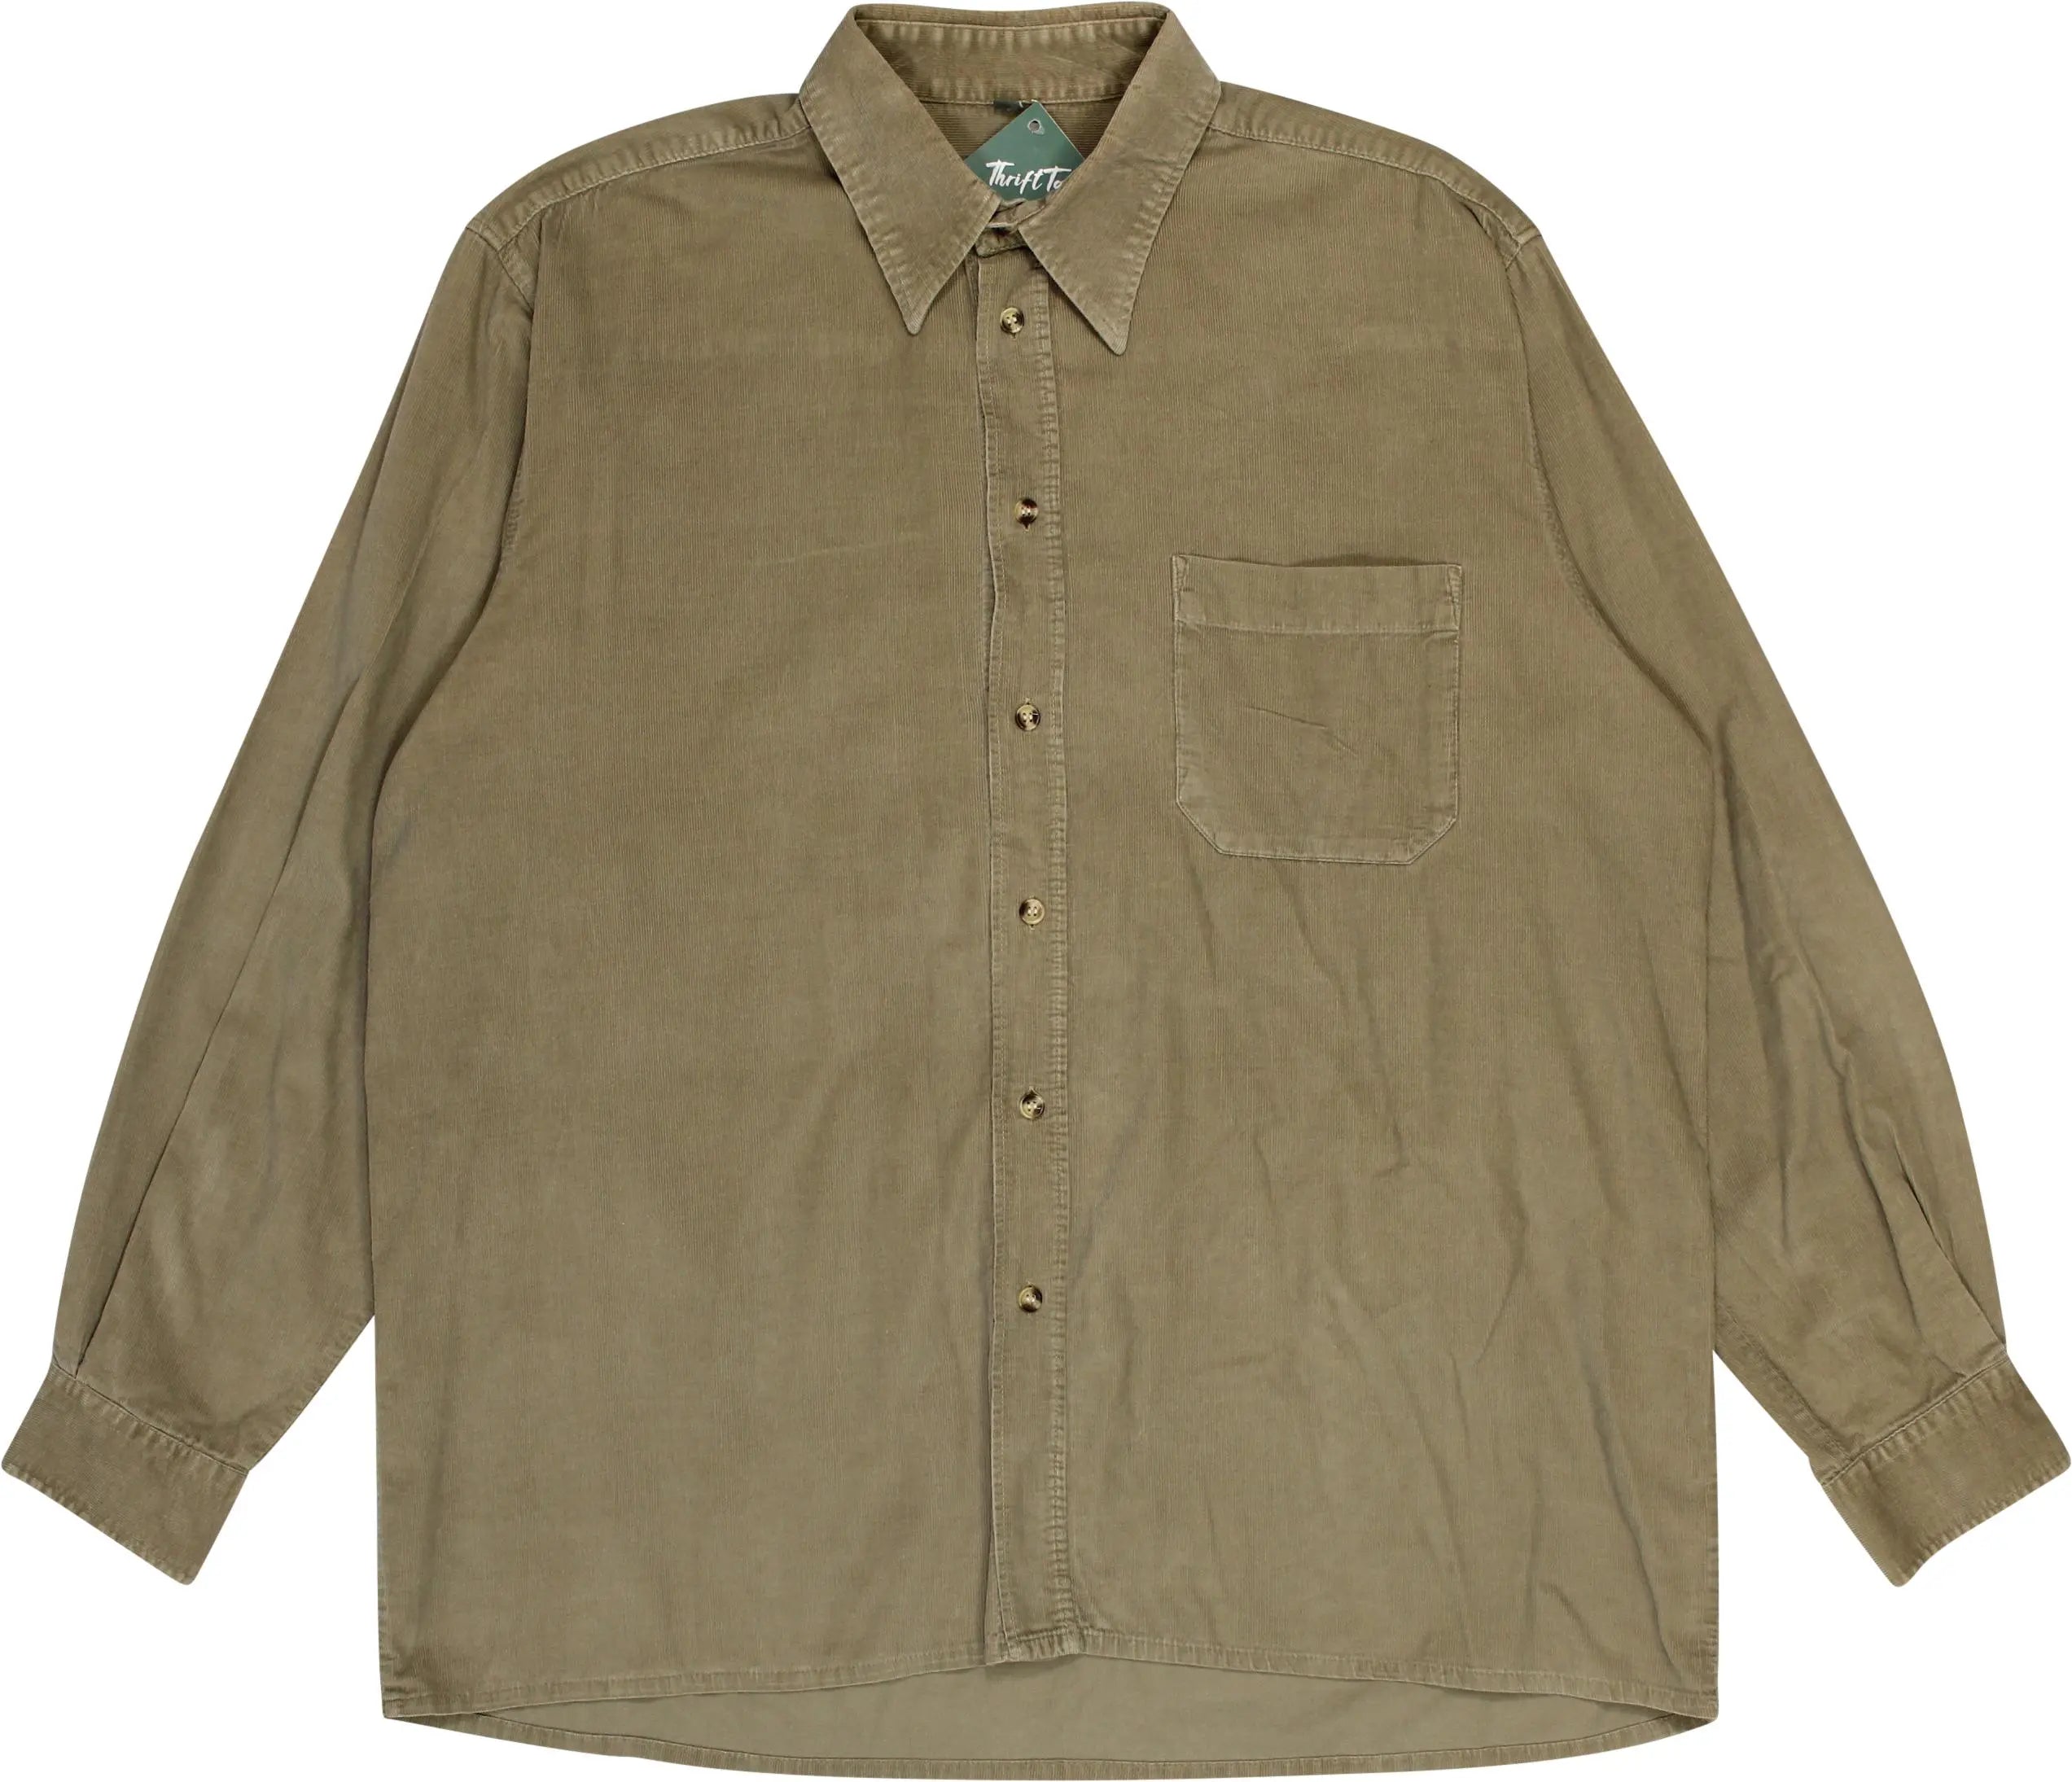 Mc Panthon - Corduroy Shirt- ThriftTale.com - Vintage and second handclothing